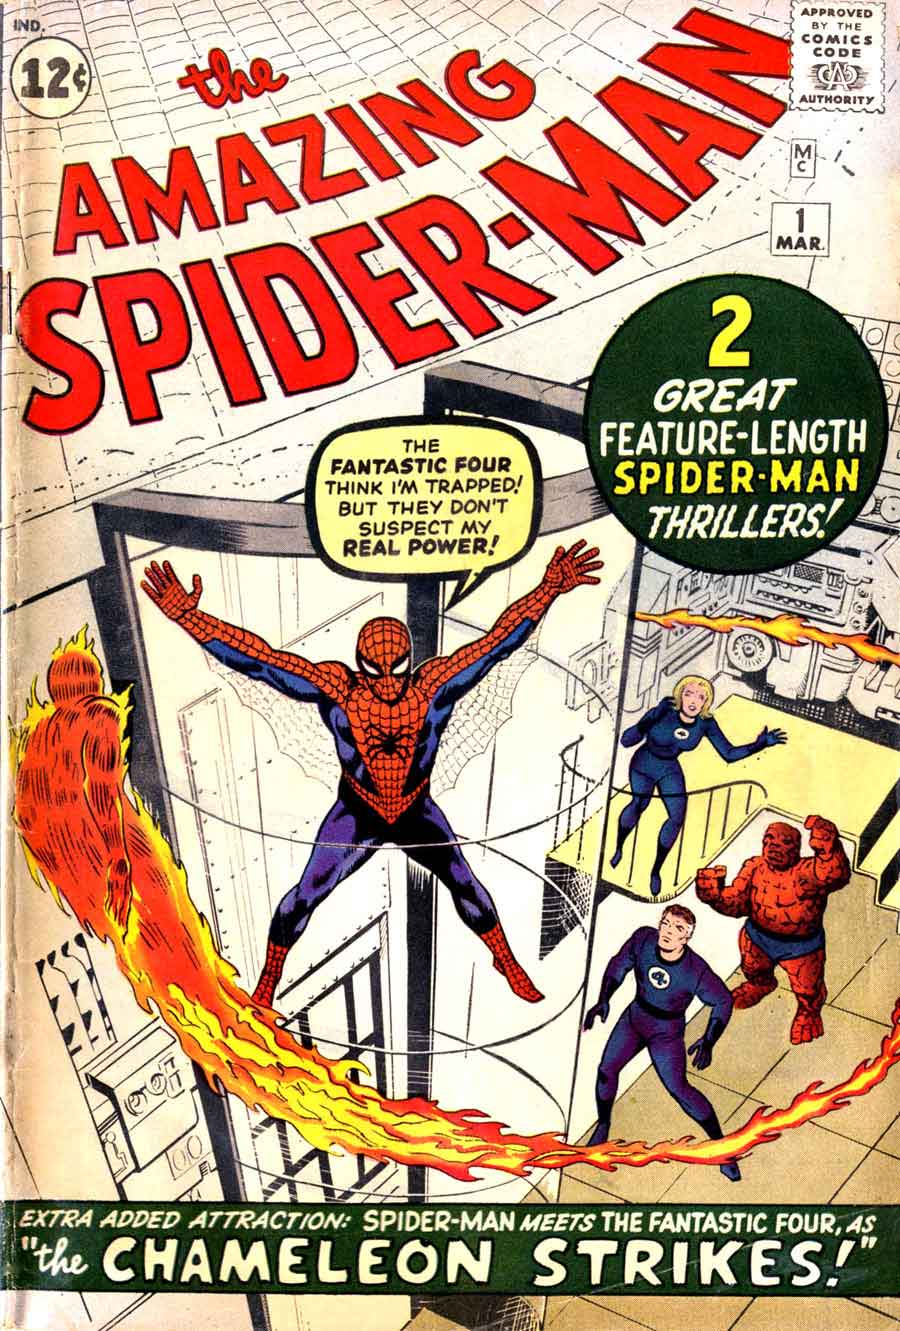 Amazing Spider-man v1 #1 1963 marvel comic book cover art by Jack Kirby, Steve Ditko